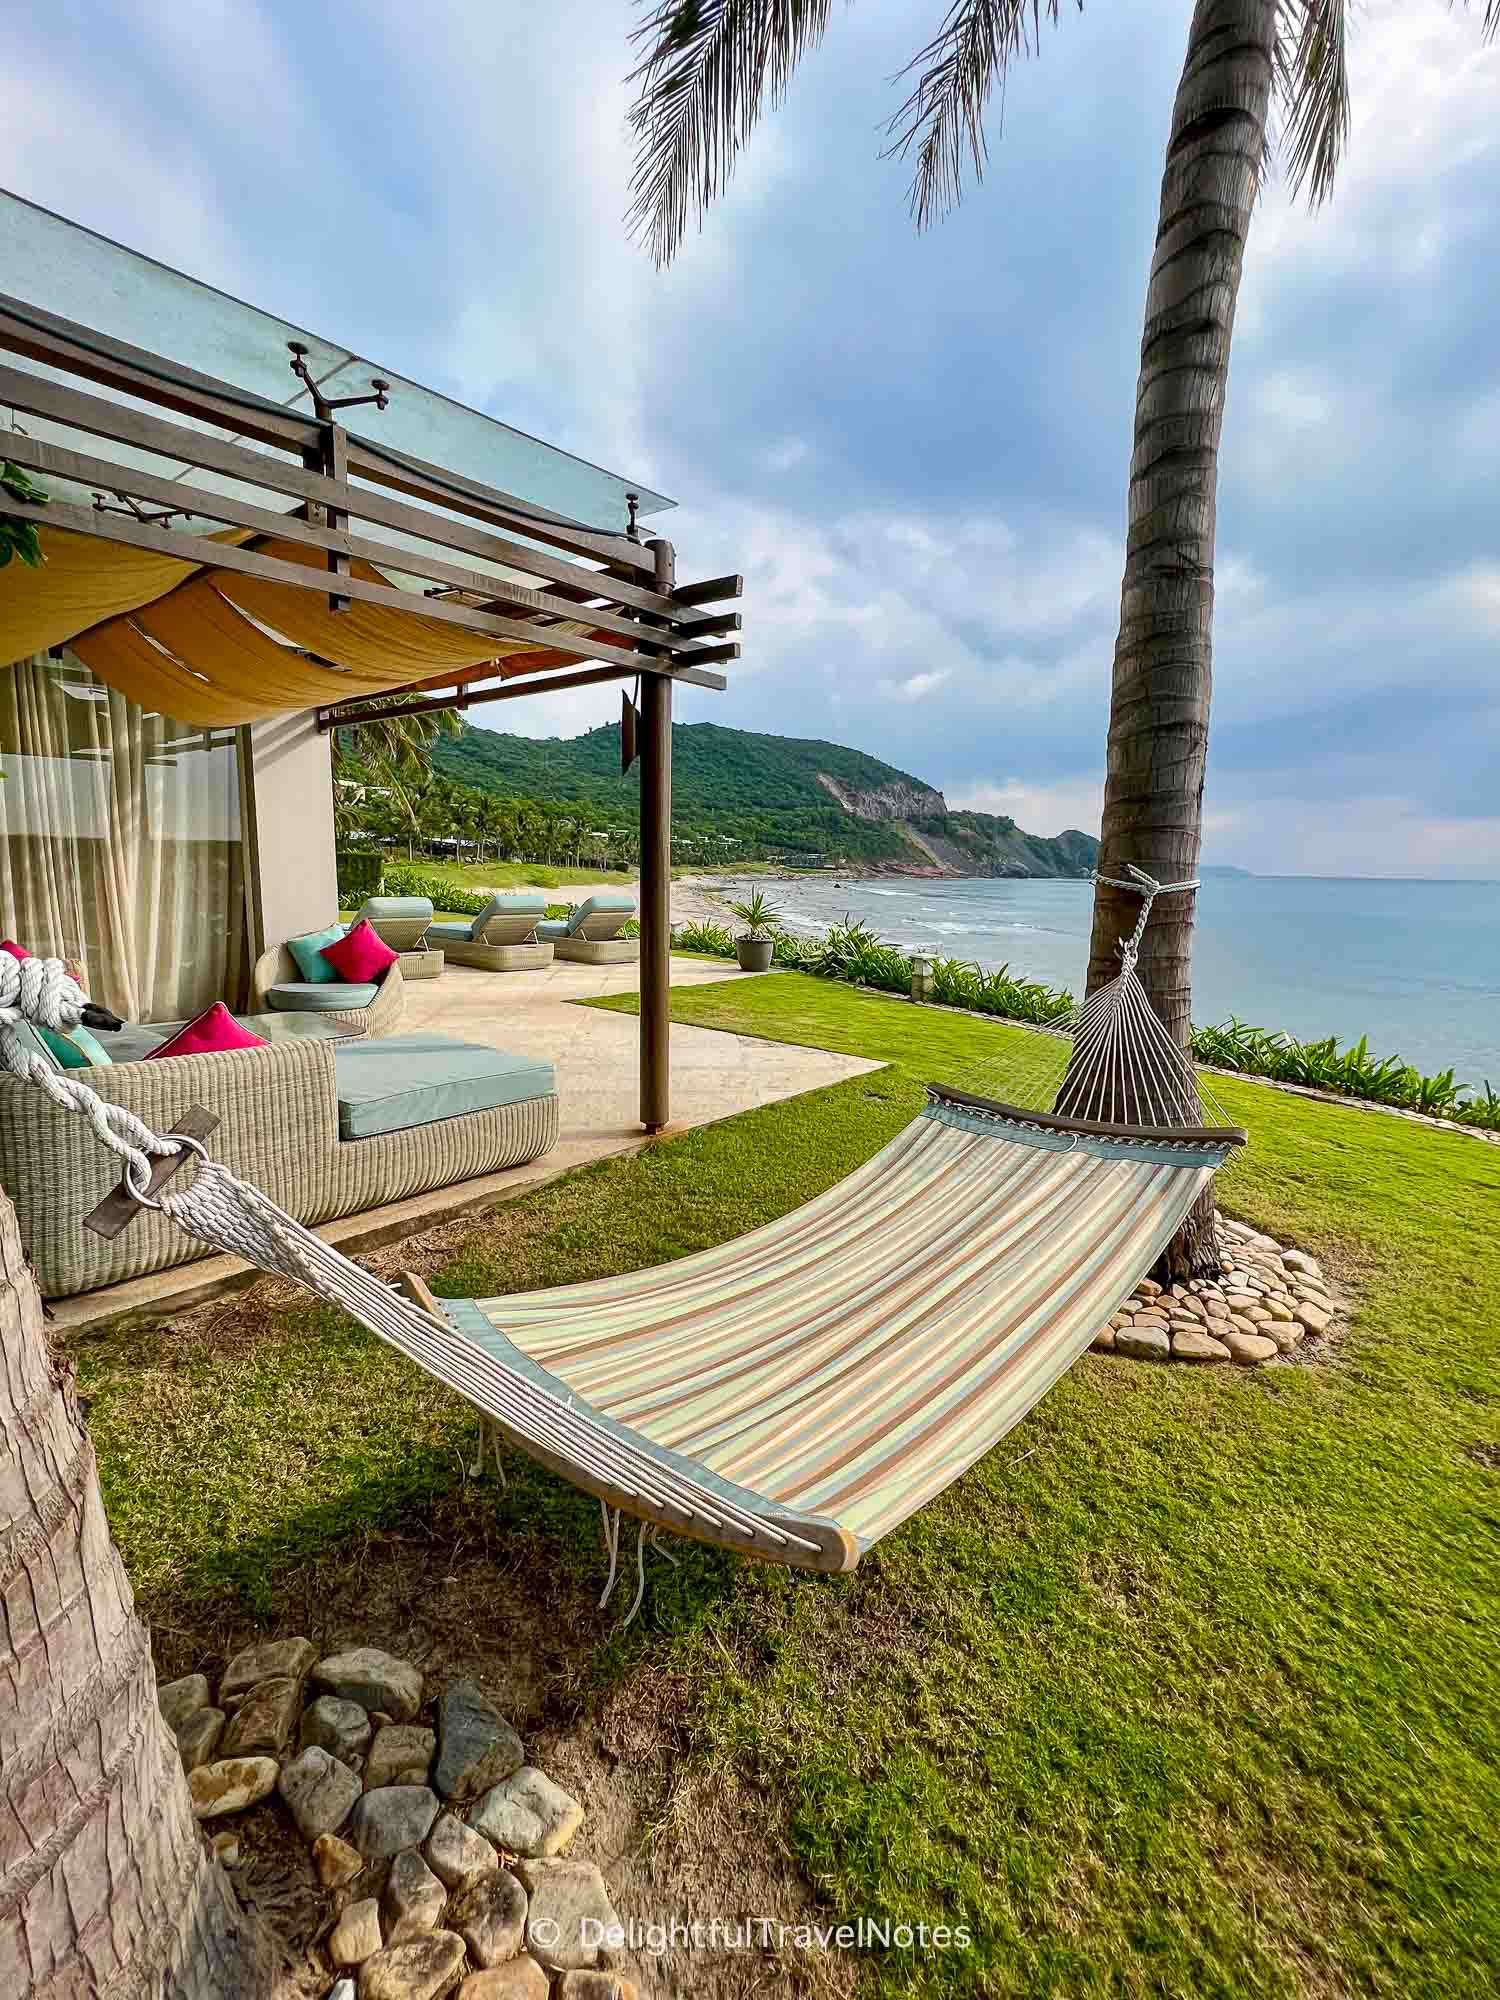 villa garden with a hammock overlooking the sea at Mia Nha Trang Resort.